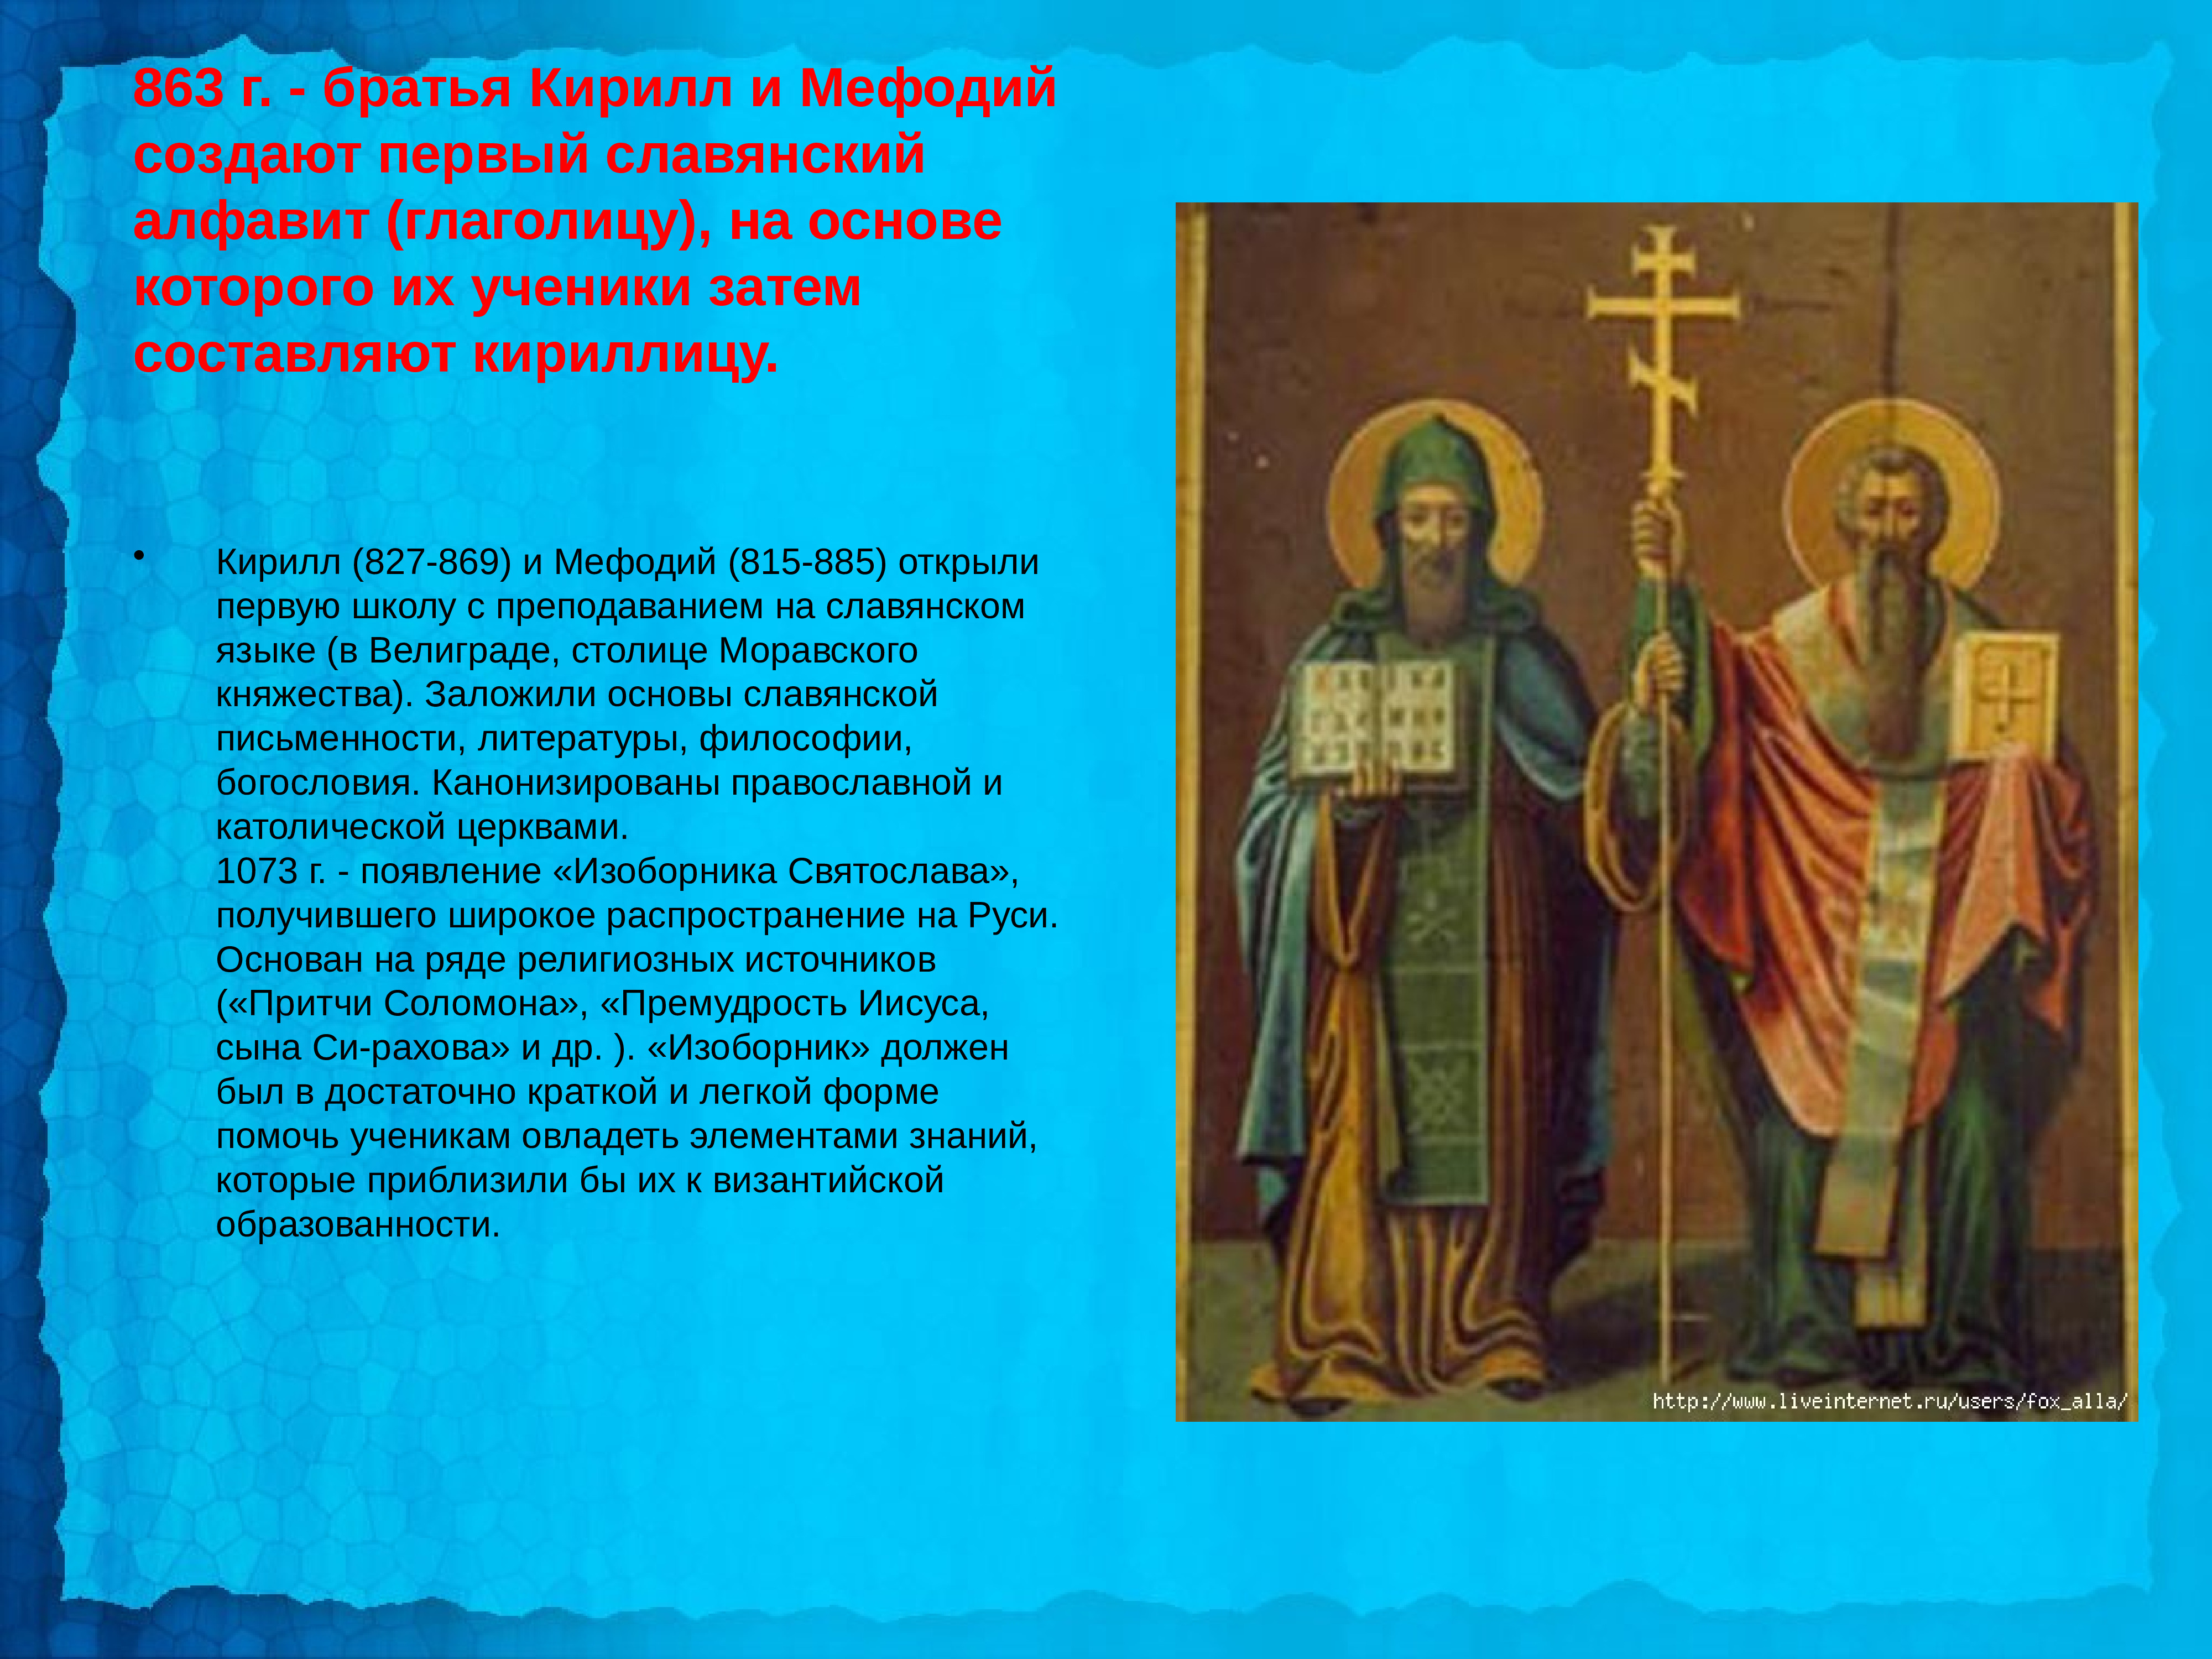 Кирилл (827-869) и Мефодий (815-885)